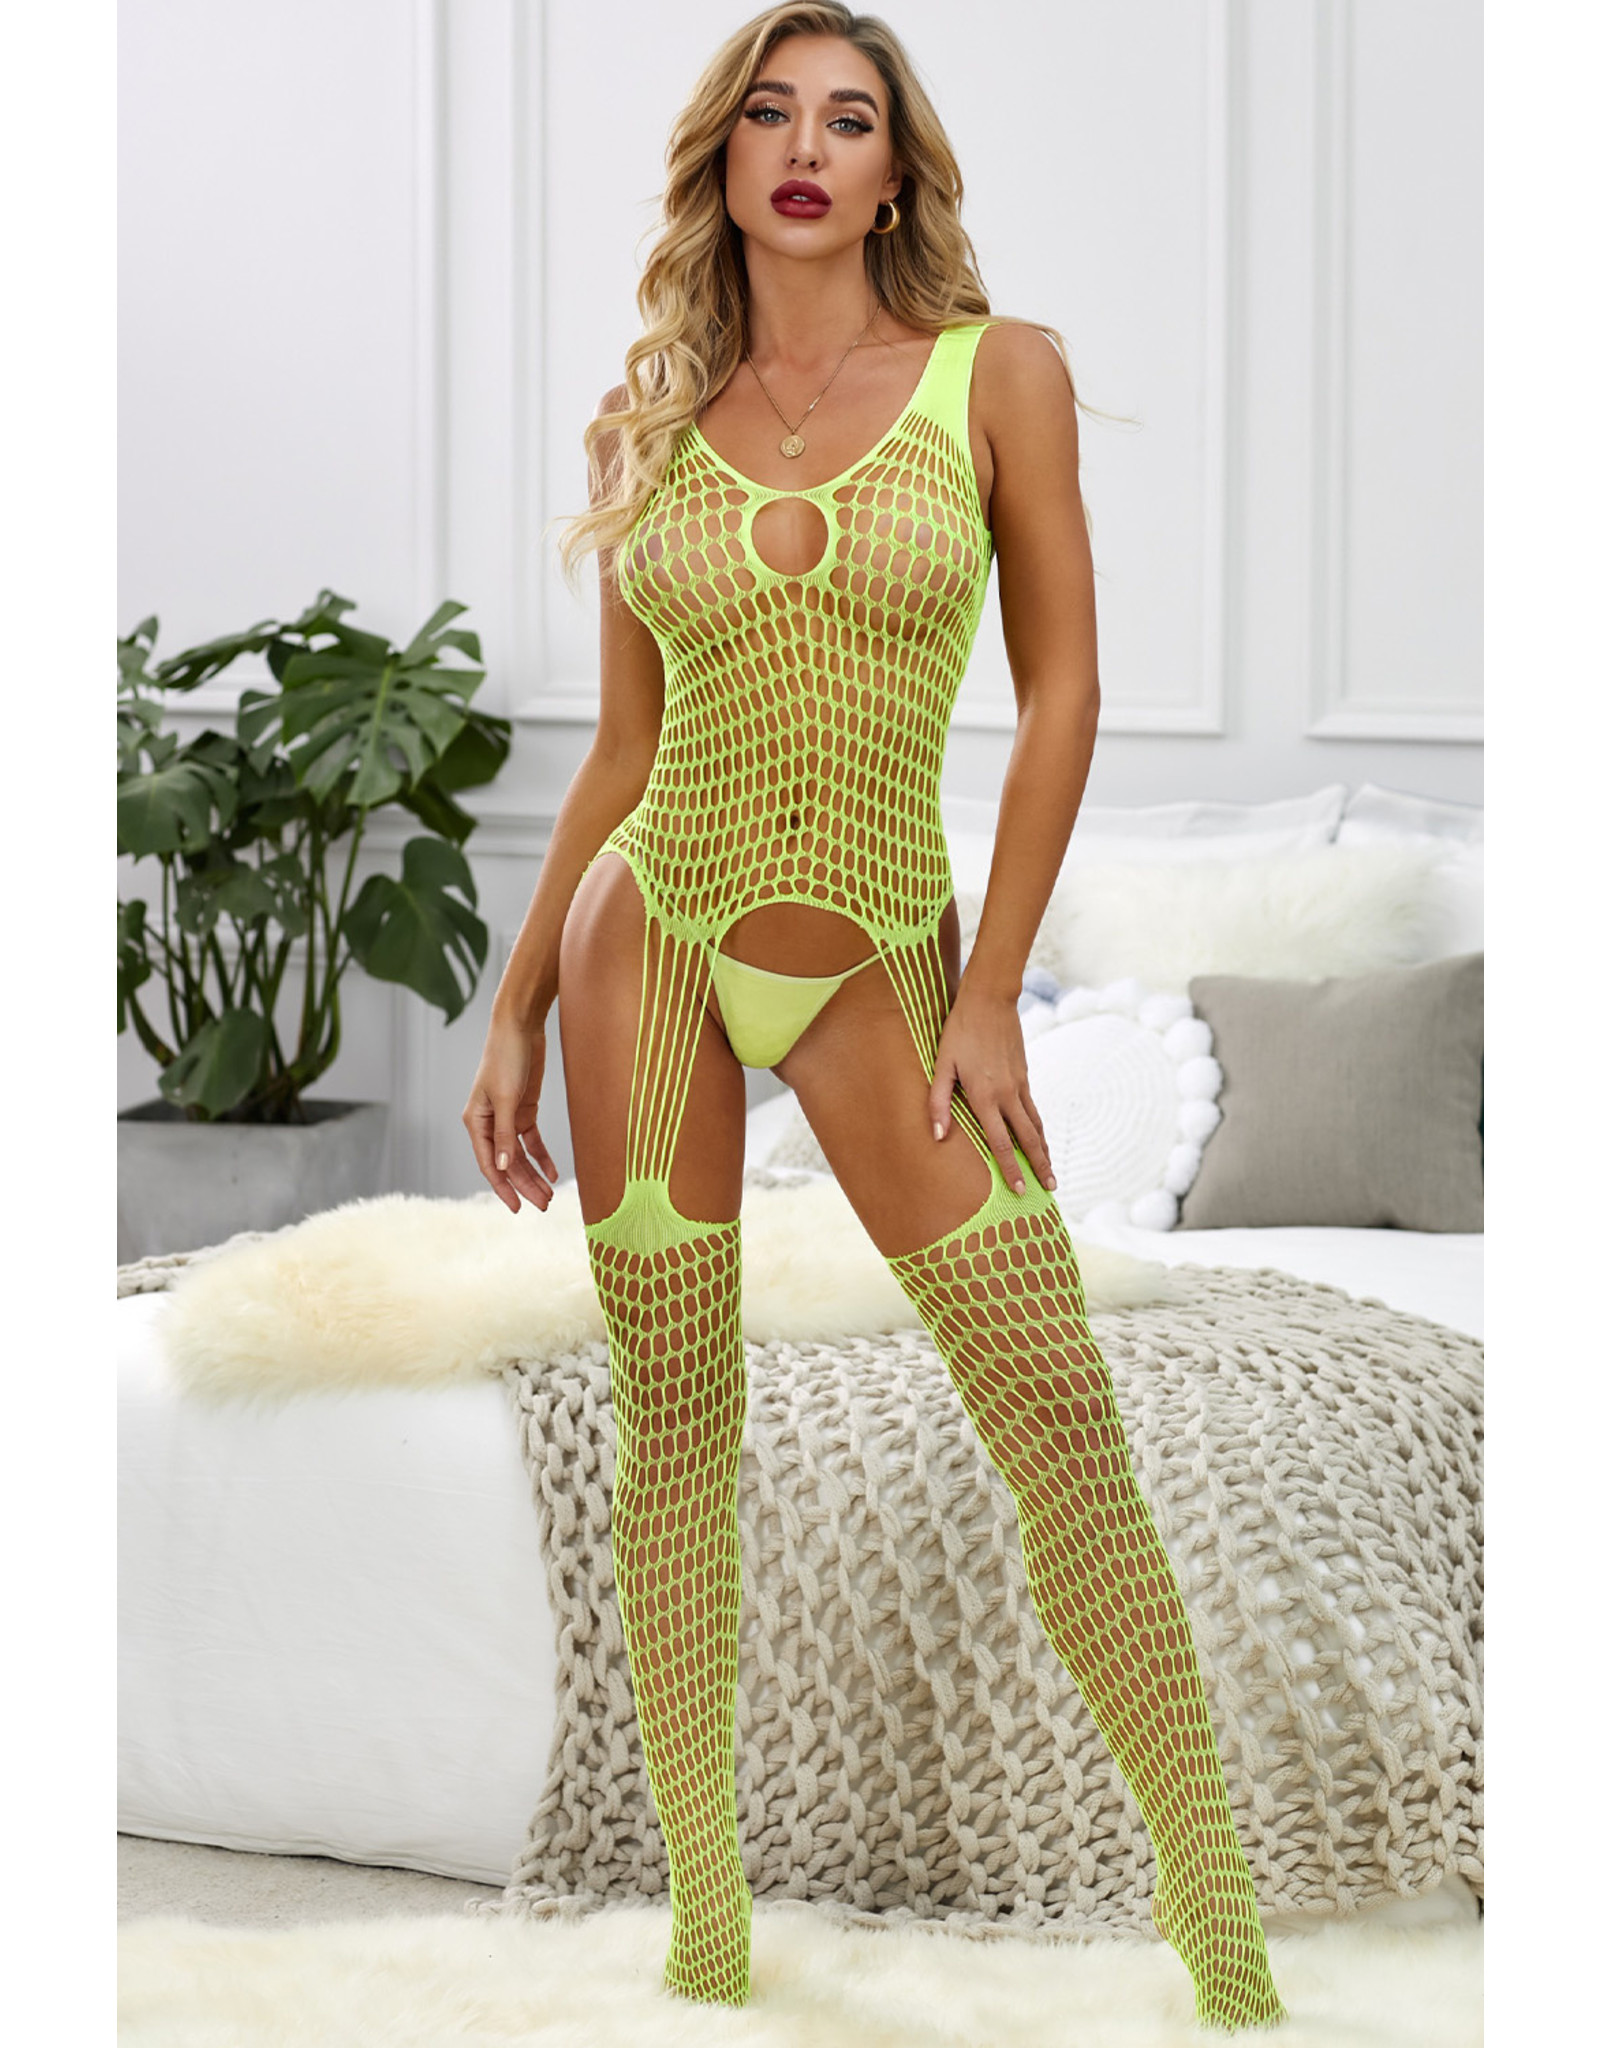 Babylon Babylon Fishnet Neon Green Suspender Sleeveless Bodystocking